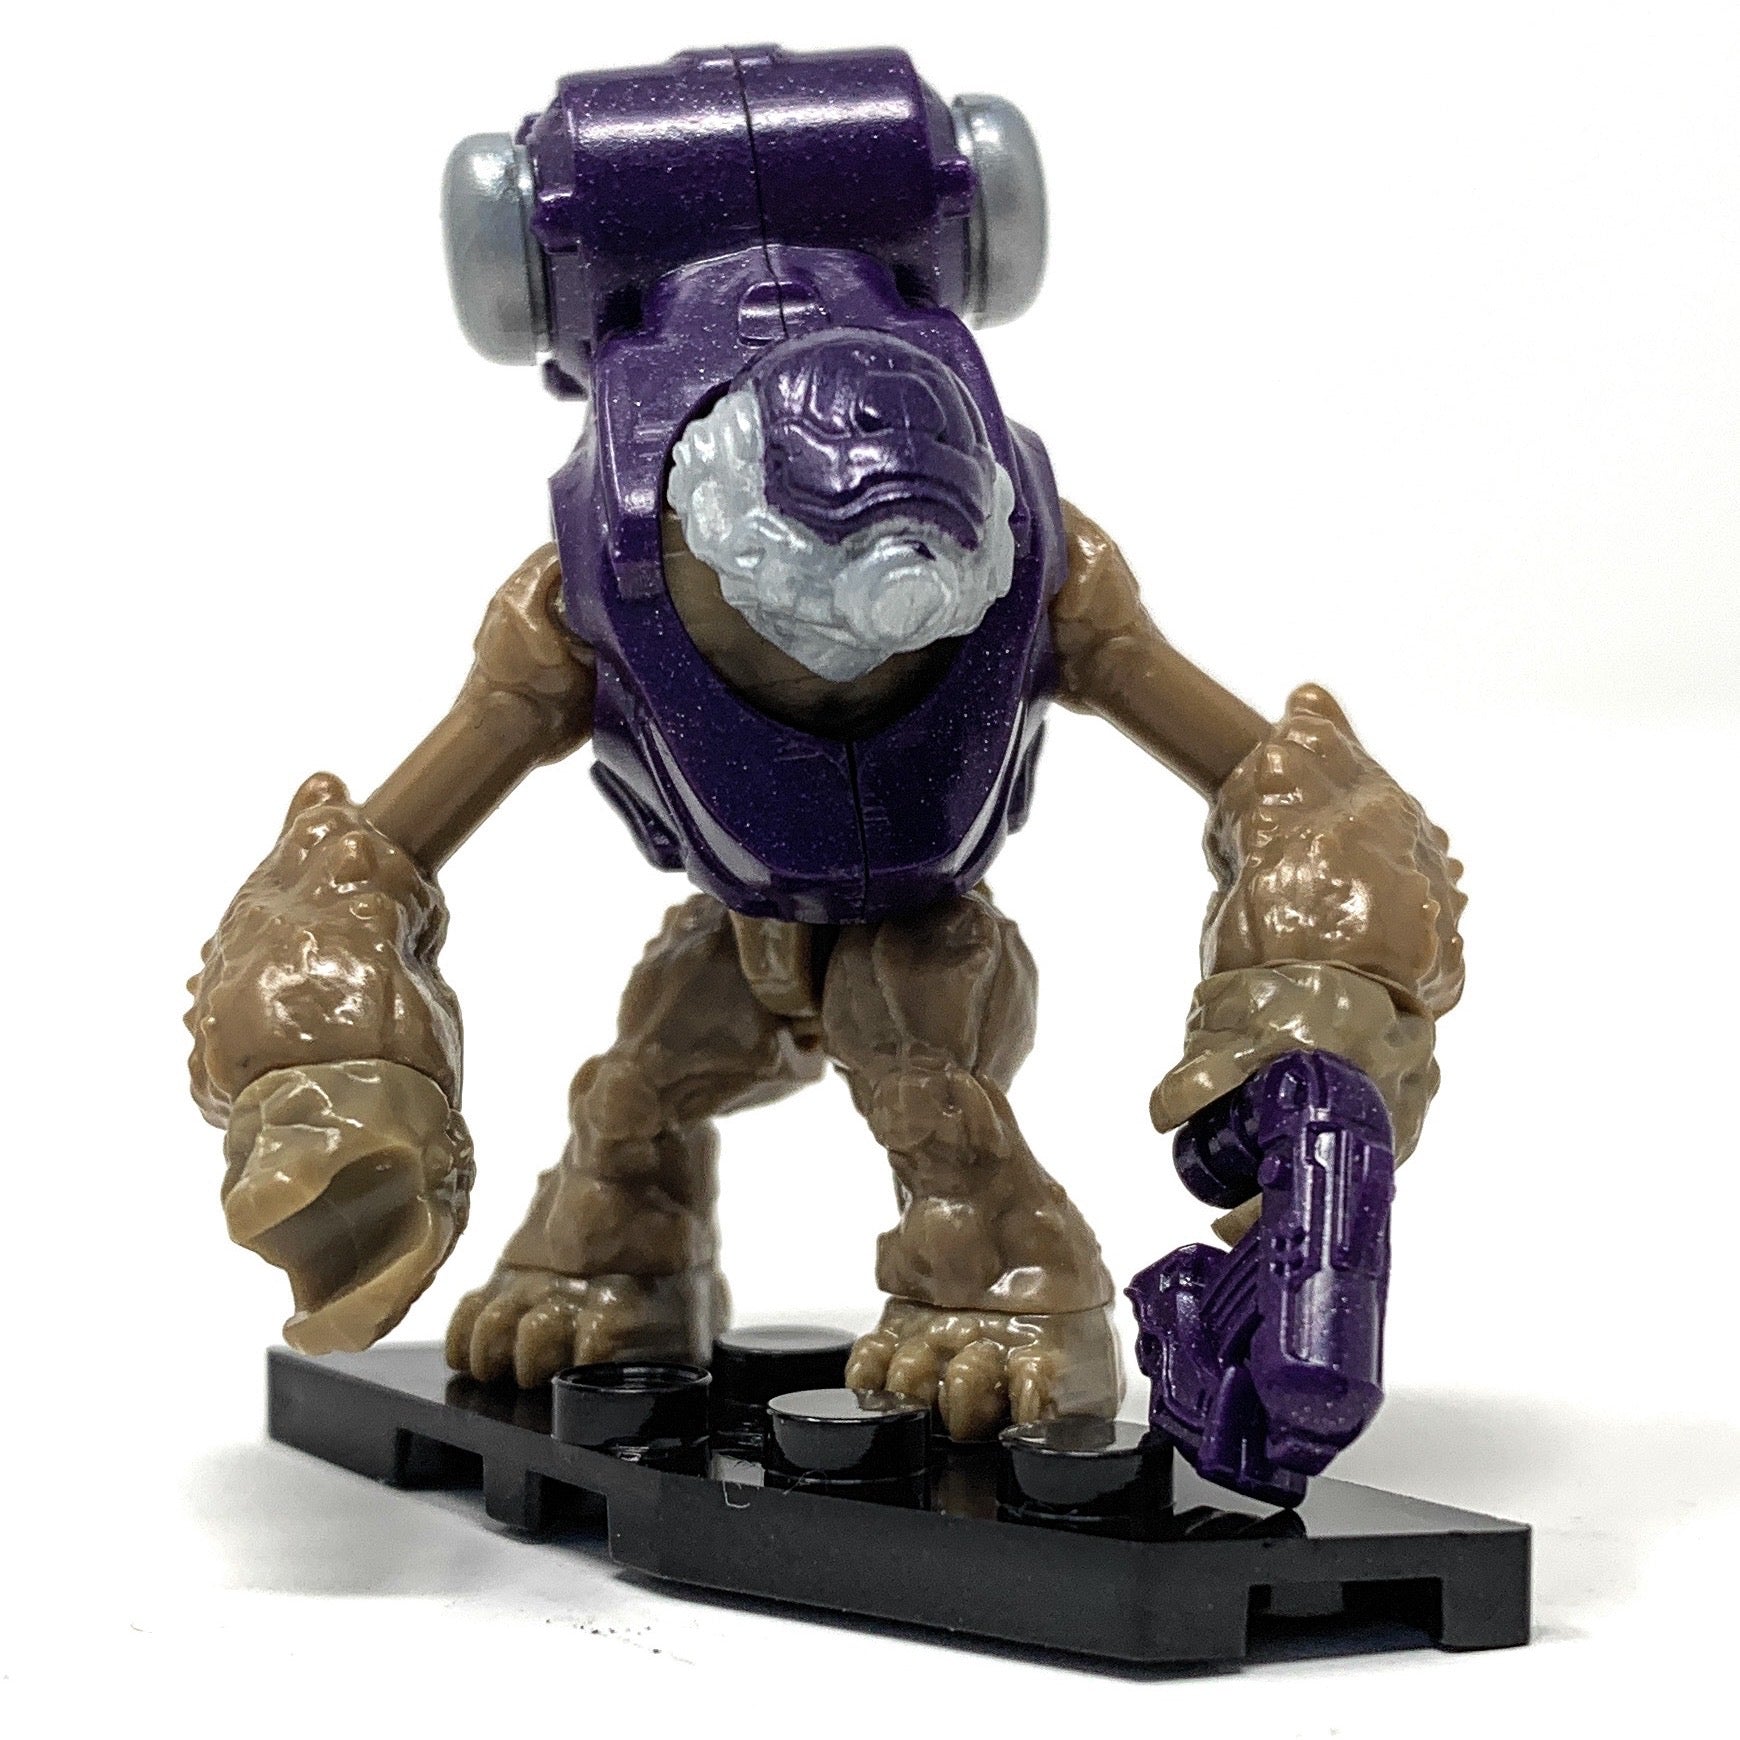 Grunt Imperial (Purple Armor) - Mega Construx Halo Micro Figure, Infinite Series 4 (2022)